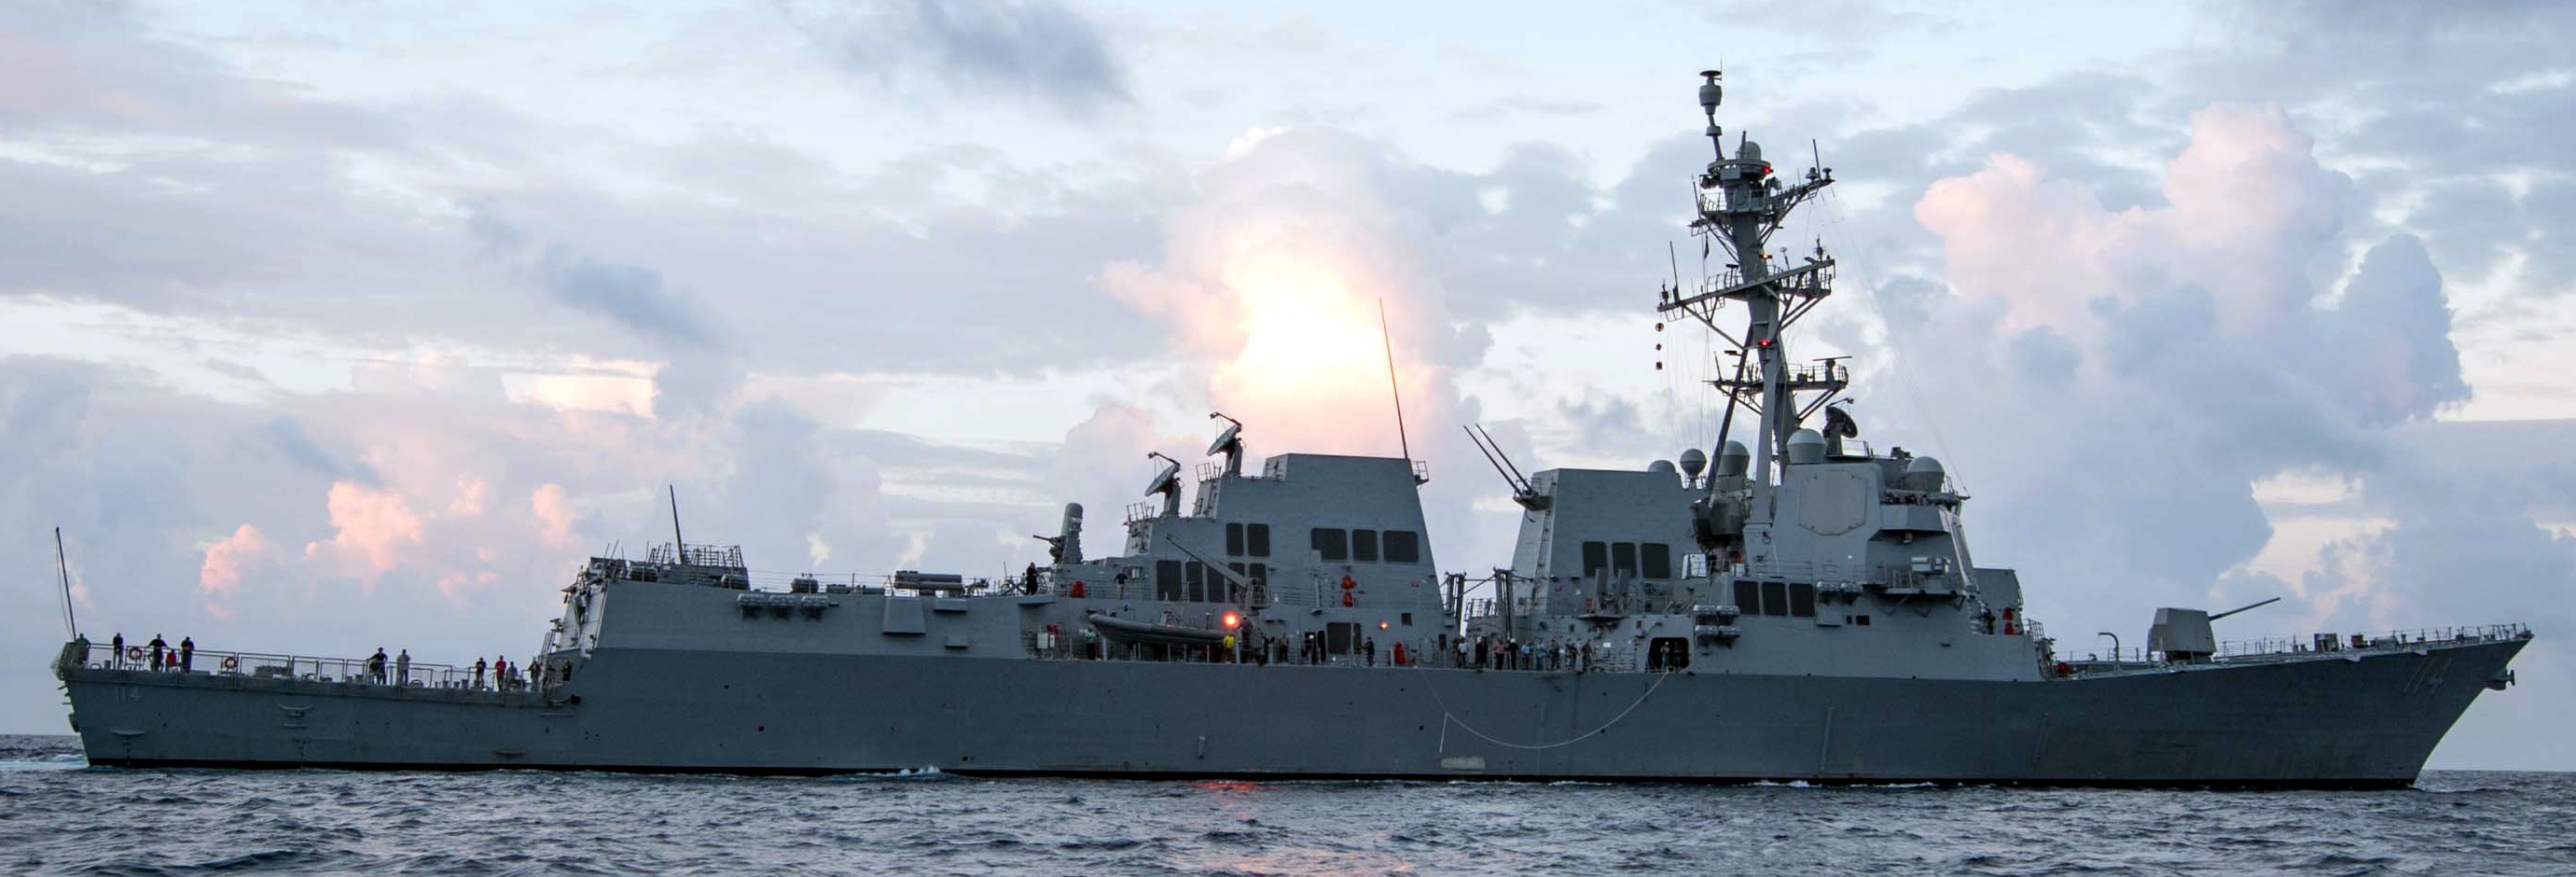 ddg-114 uss ralph johnson arleigh burke class guided missile destroyer us navy aegis 04 builder's trials